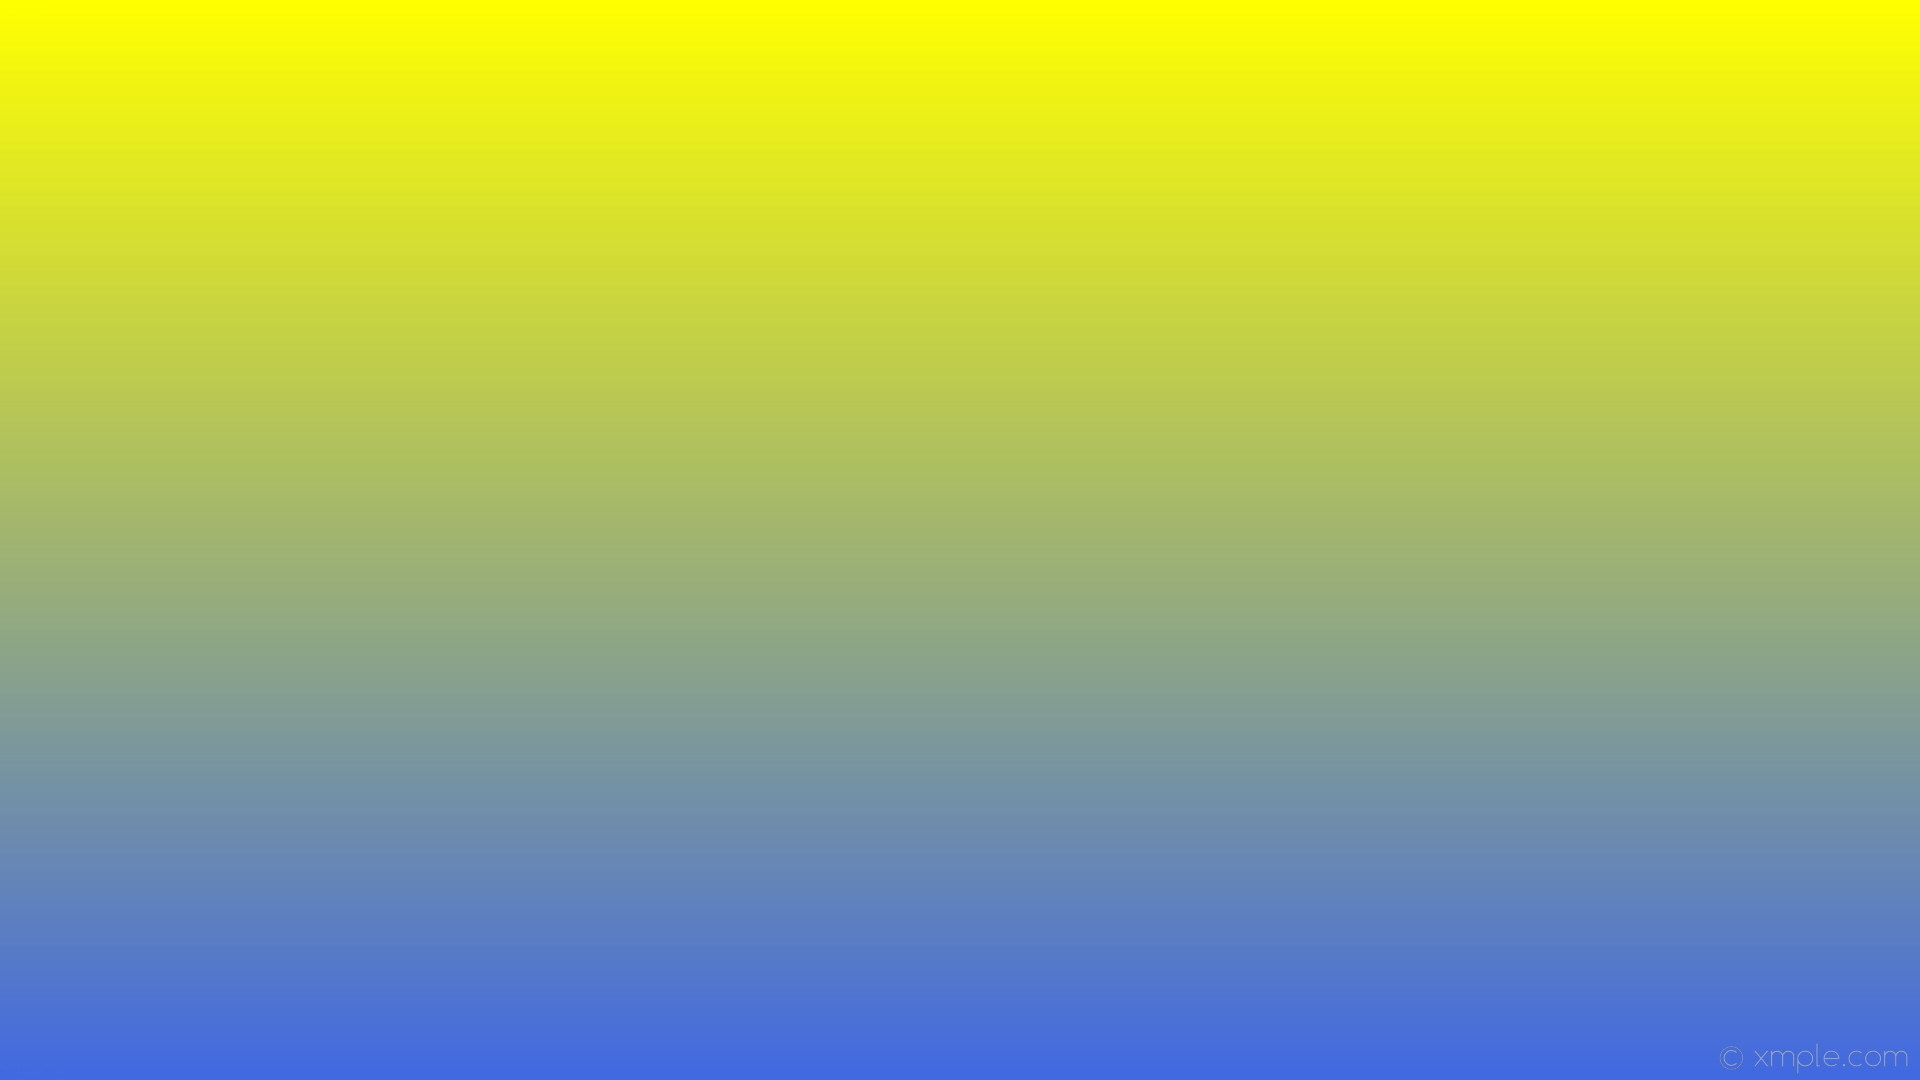 wallpaper yellow blue gradient linear royal blue #ffff00 #4169e1 90Â°